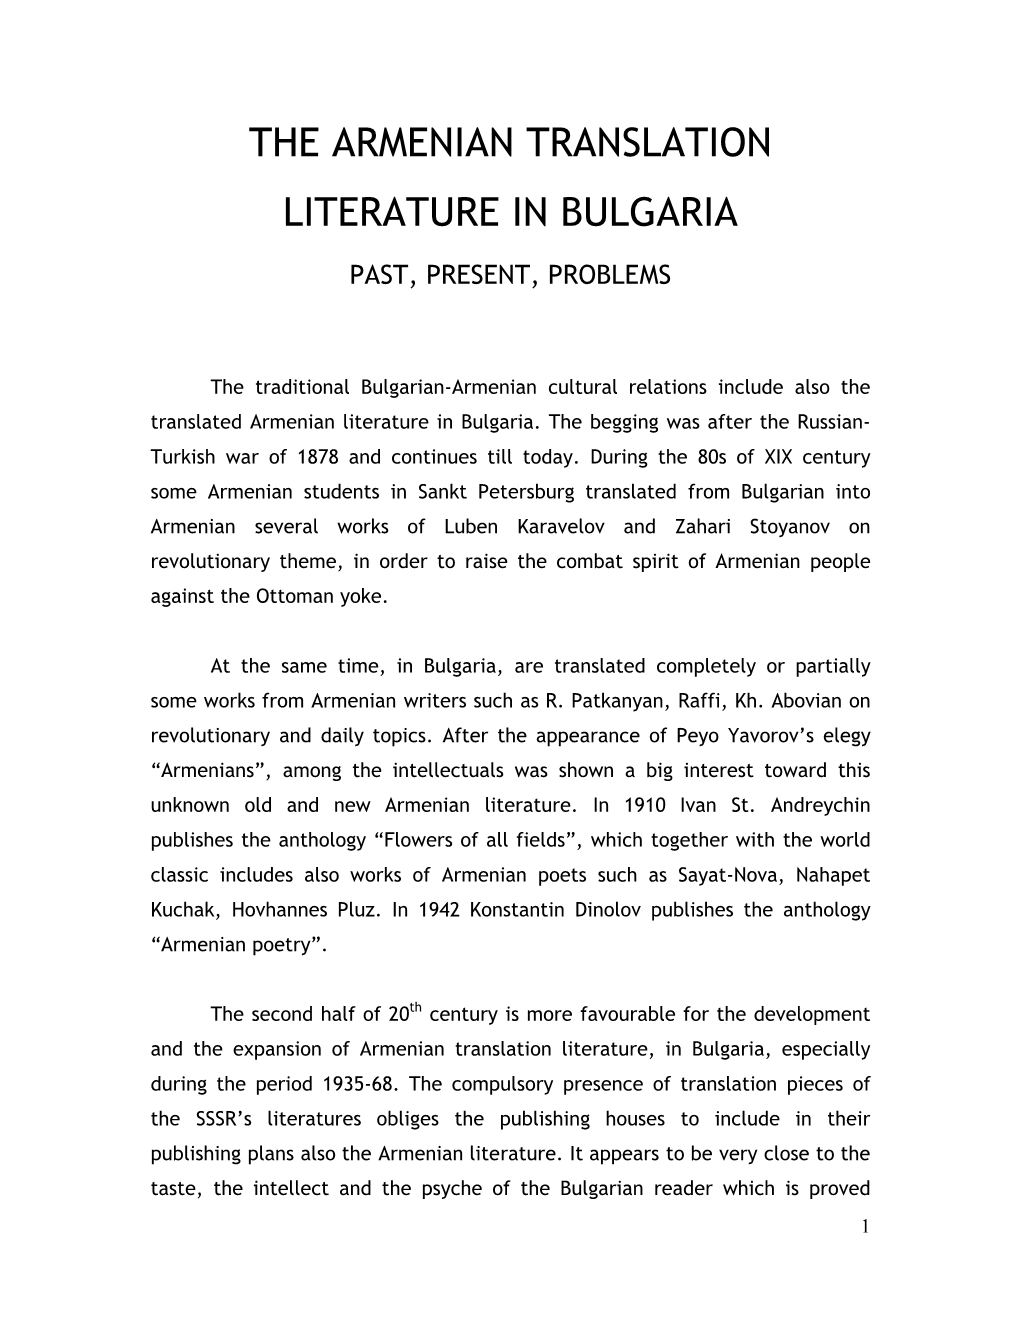 The Armenian Translation Literature in Bulgaria